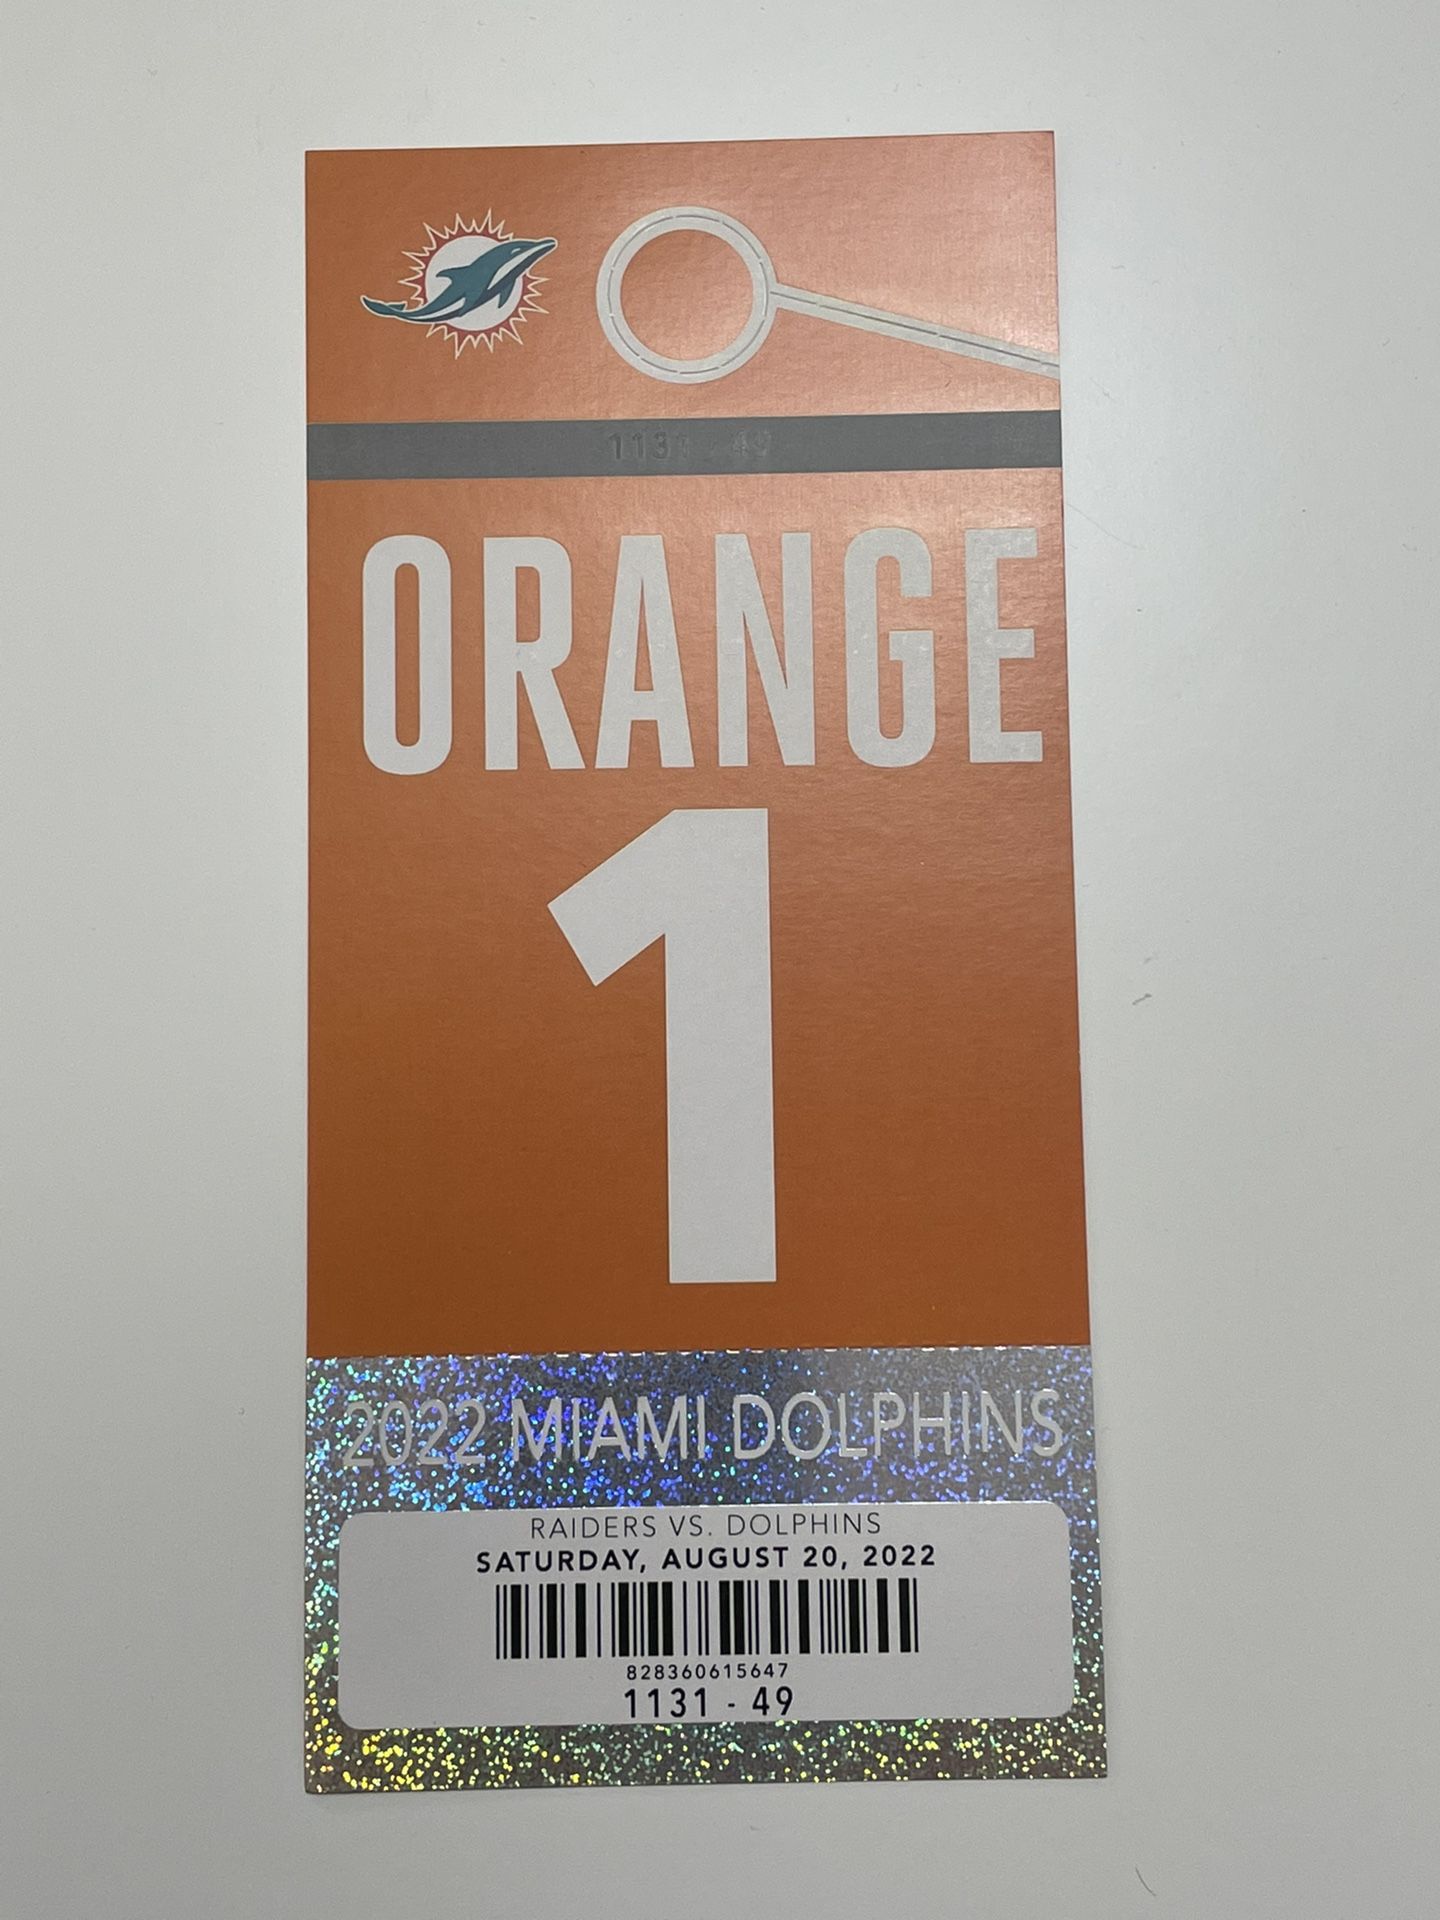 Raiders at Dolphins: 1 Orange Parking Pass 